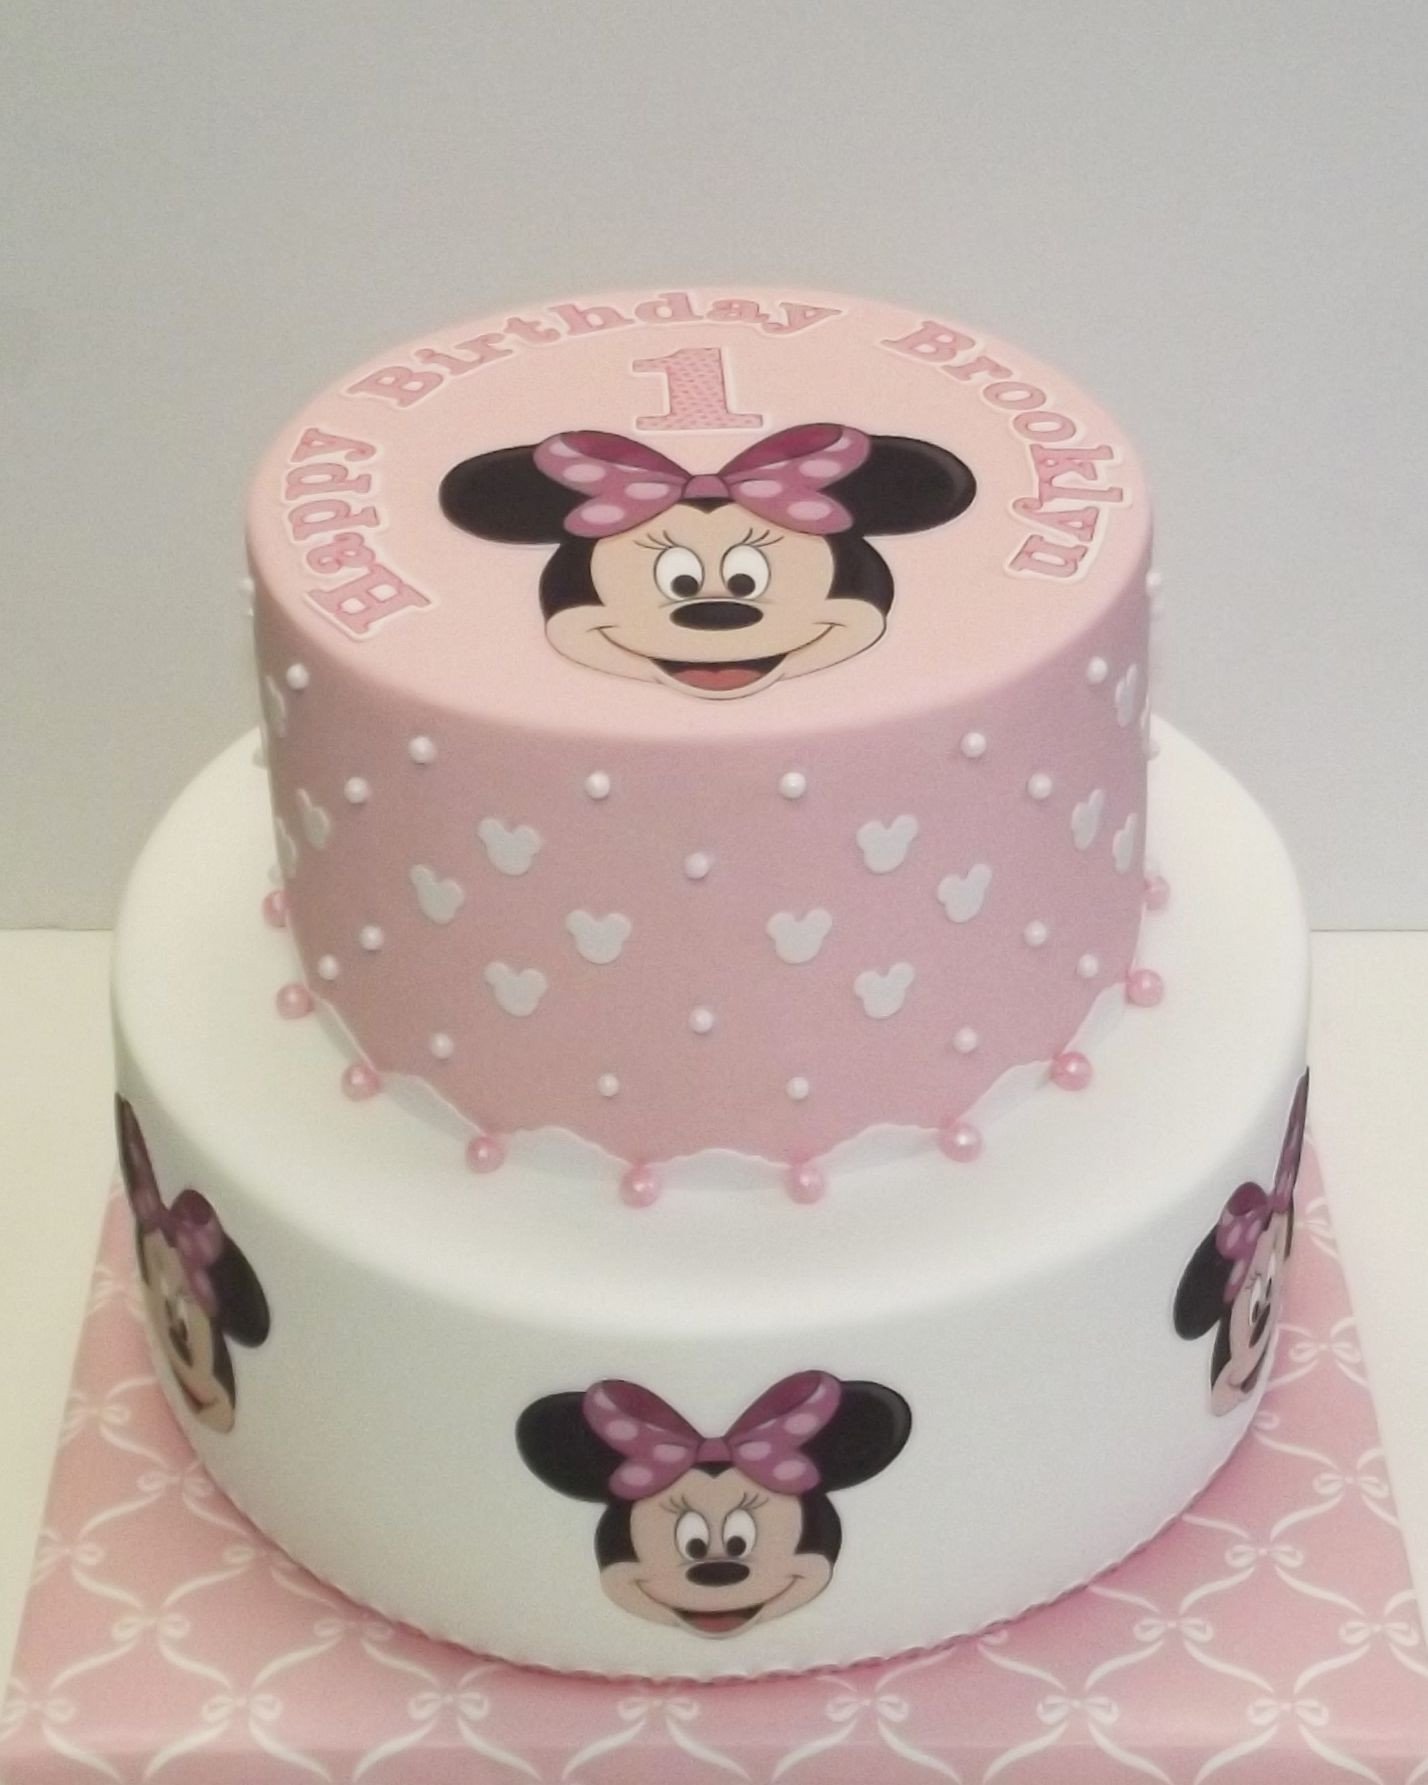 Minnie Mouse 1st Birthday Cake
 Minnie Mouse 1st Birthday Cake Cake licious